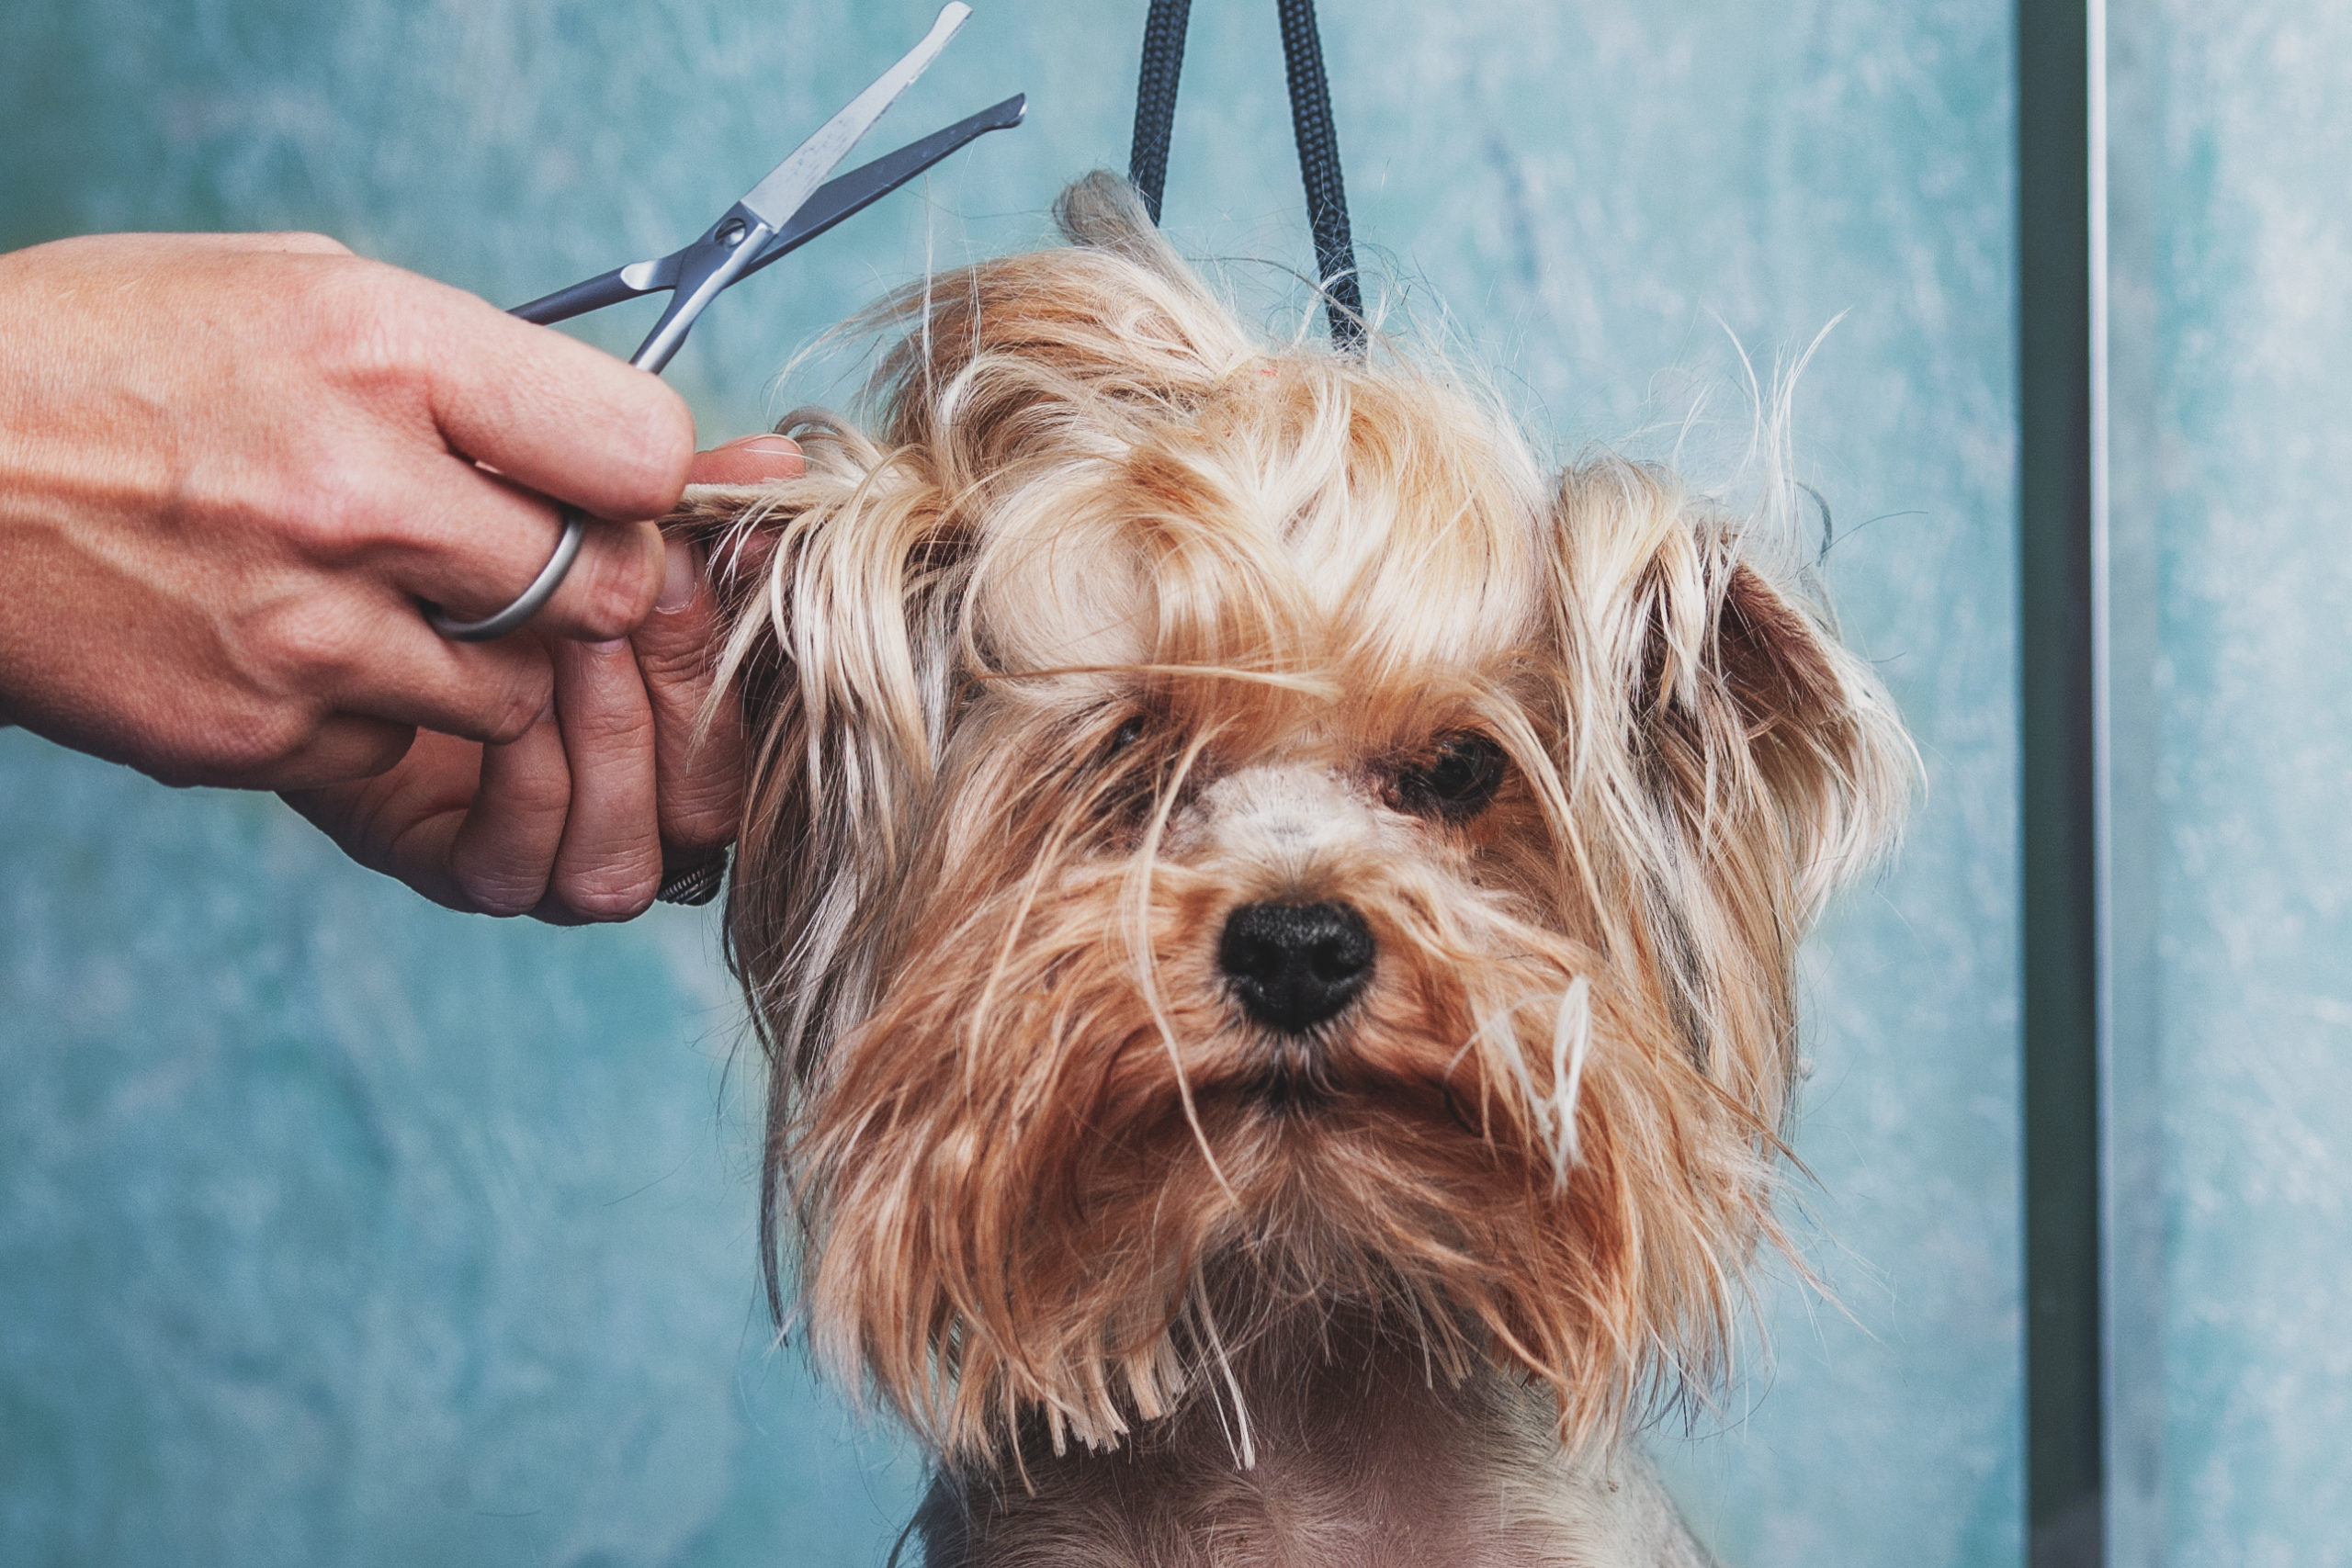 Grooming a dog's hair